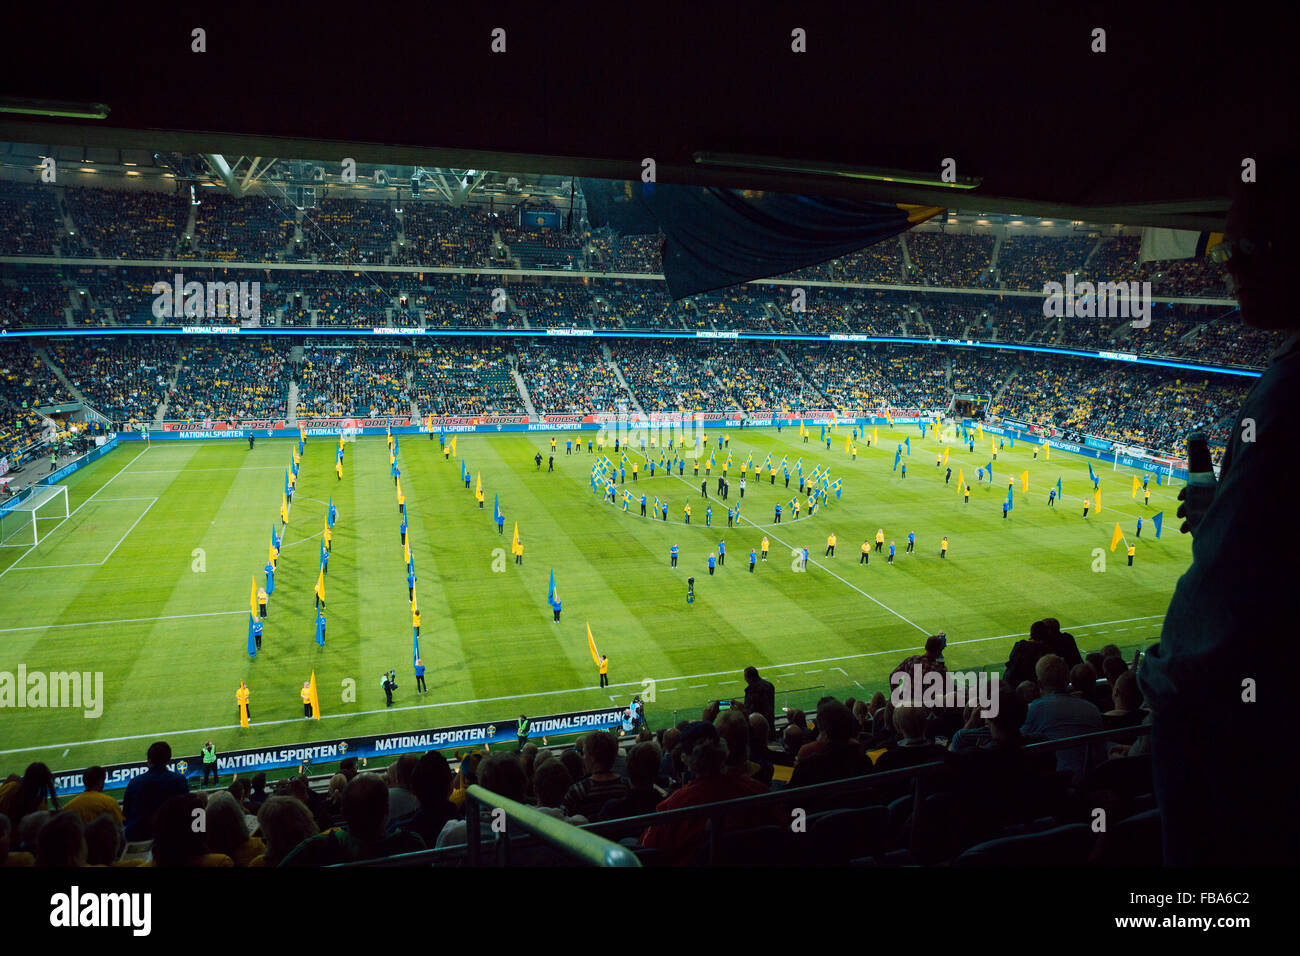 Sweden, Solna, Football match Stock Photo